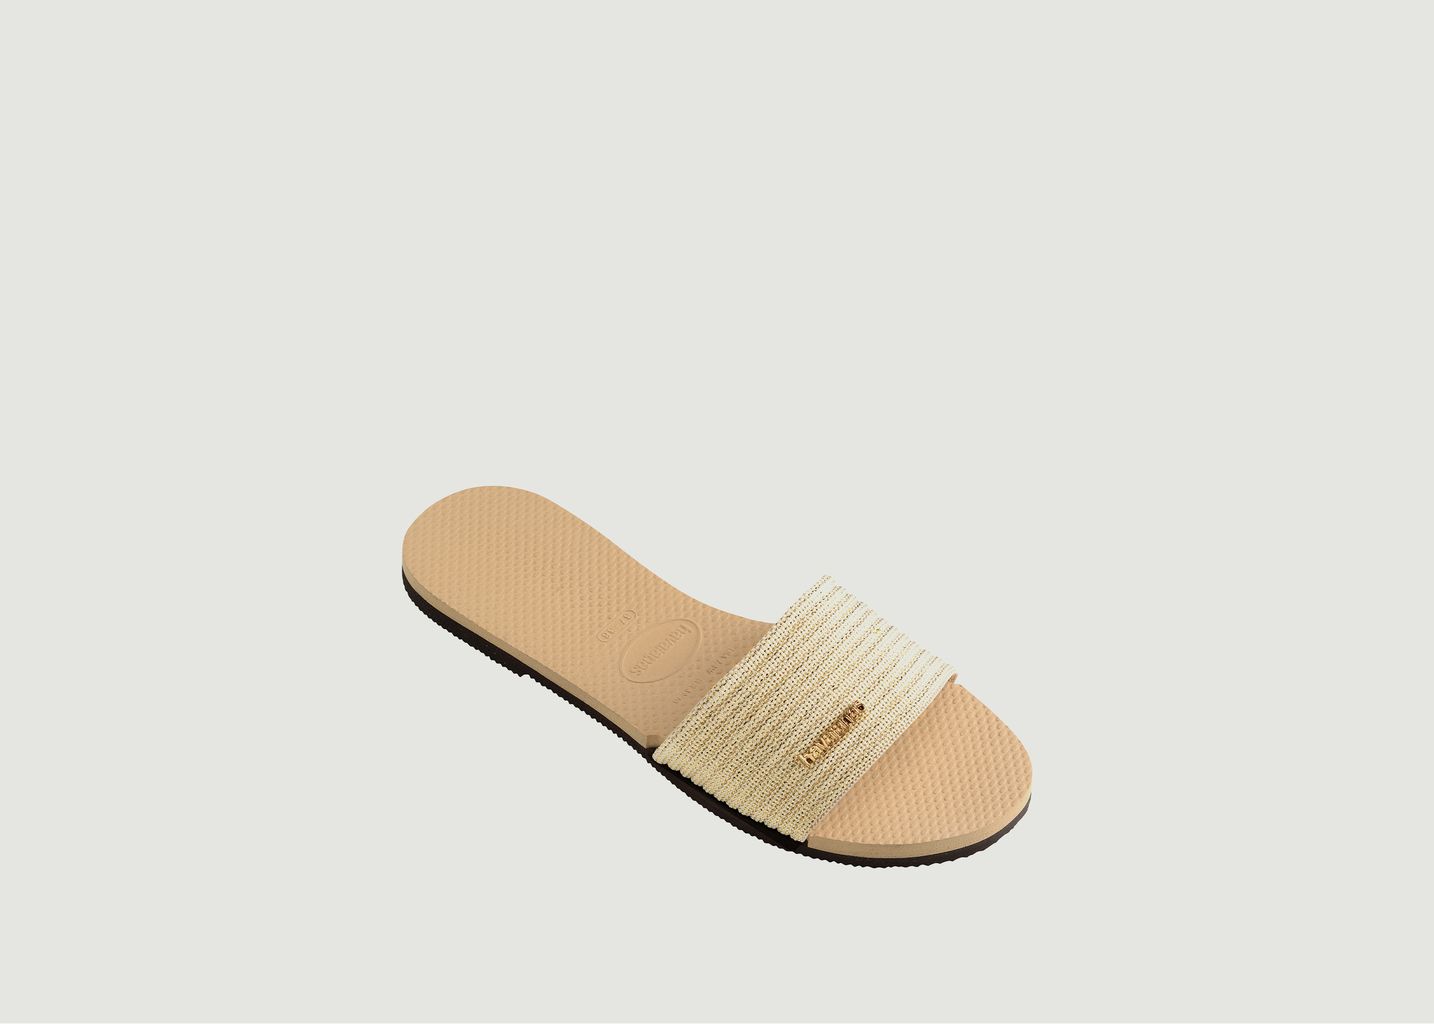 You Malta Metallic sandals in polyester - havaianas